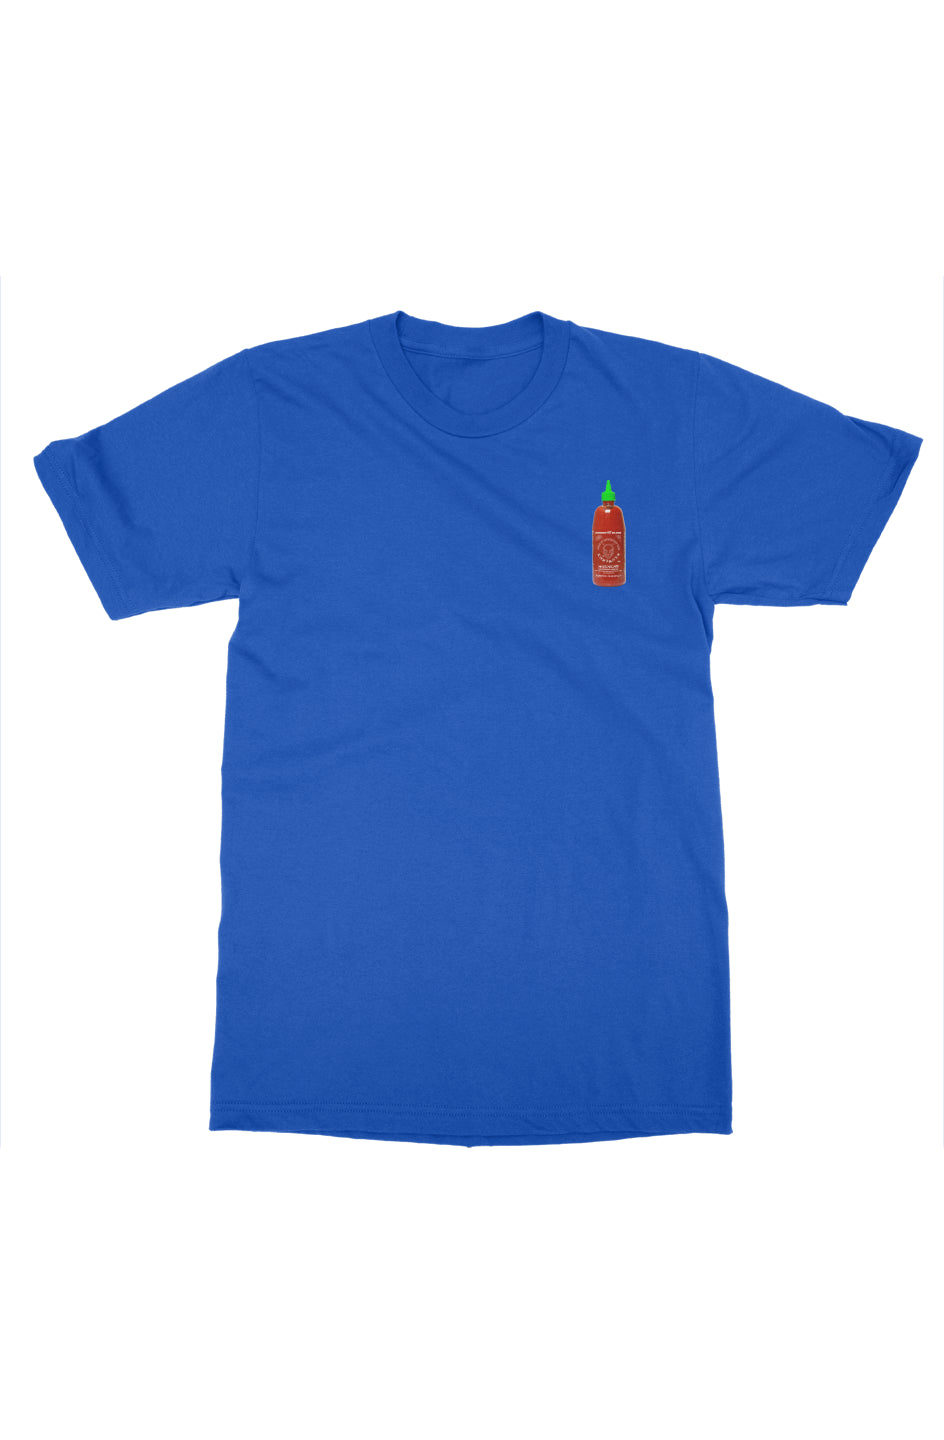 SrirachaSwap T-Shirt